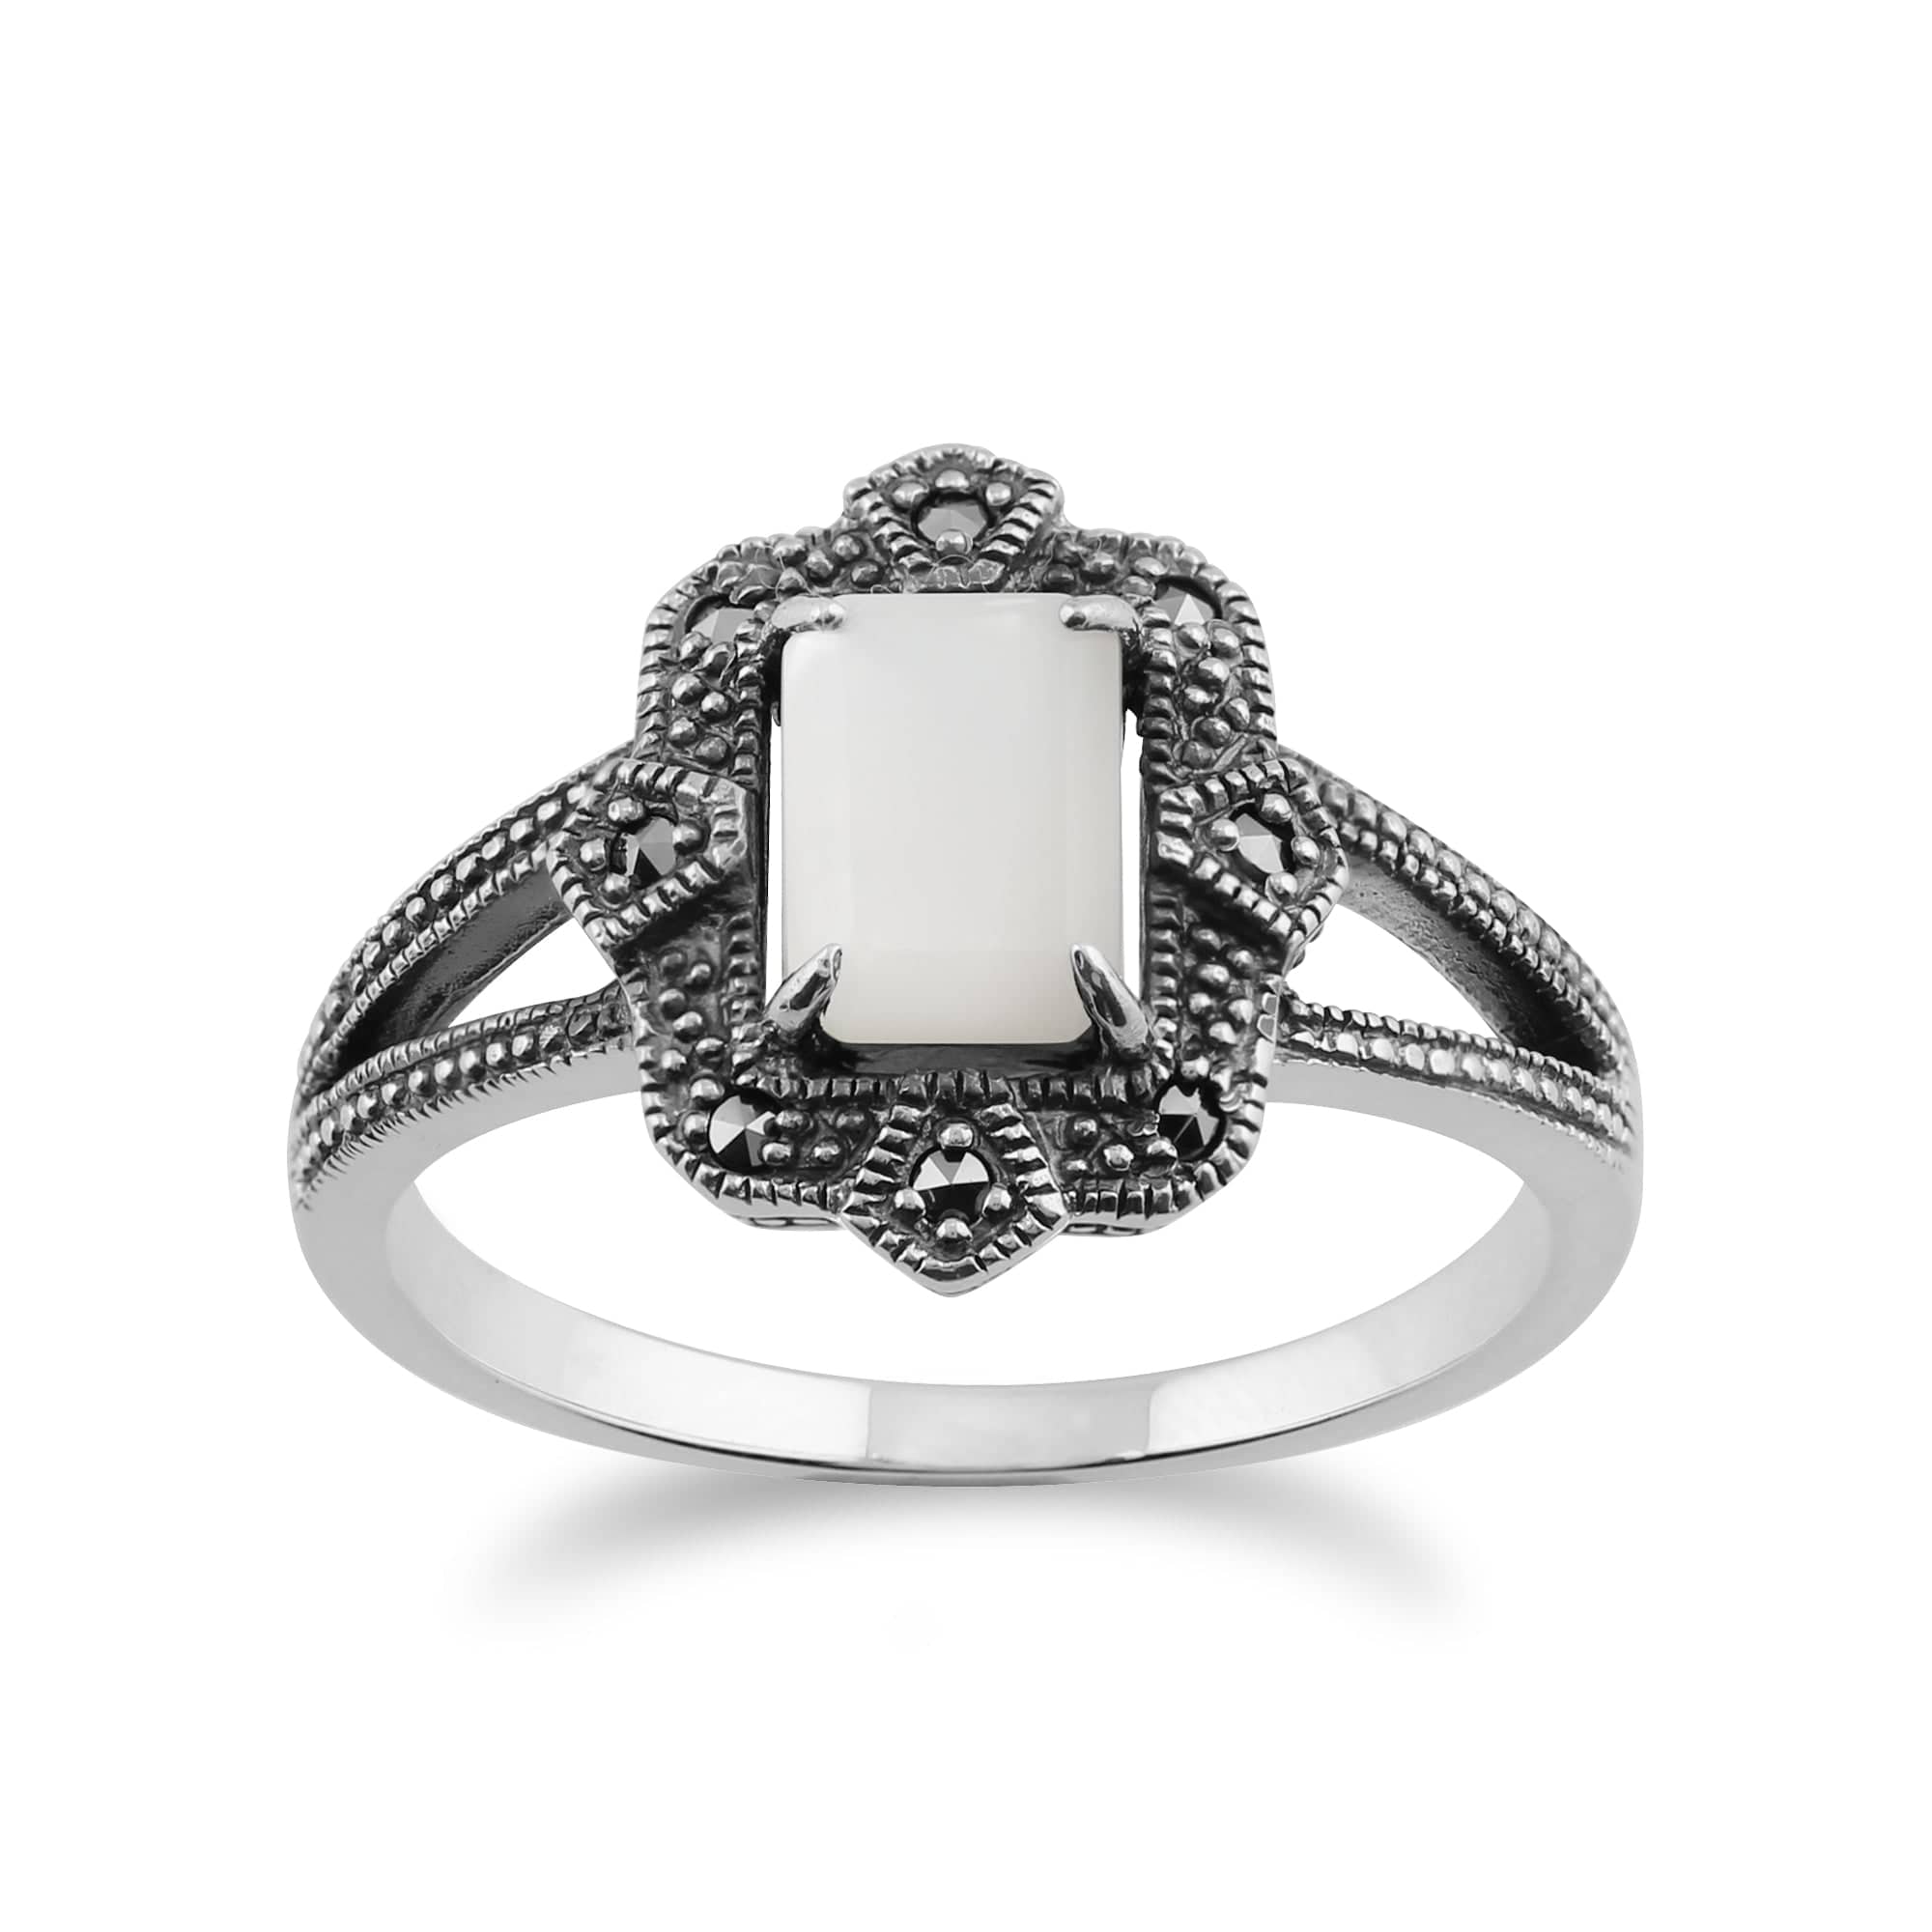 Art Deco Style Baguette Mother of Pearl & Marcasite Framed Drop Earrings & Ring Set in 925 Sterling Silver - Gemondo